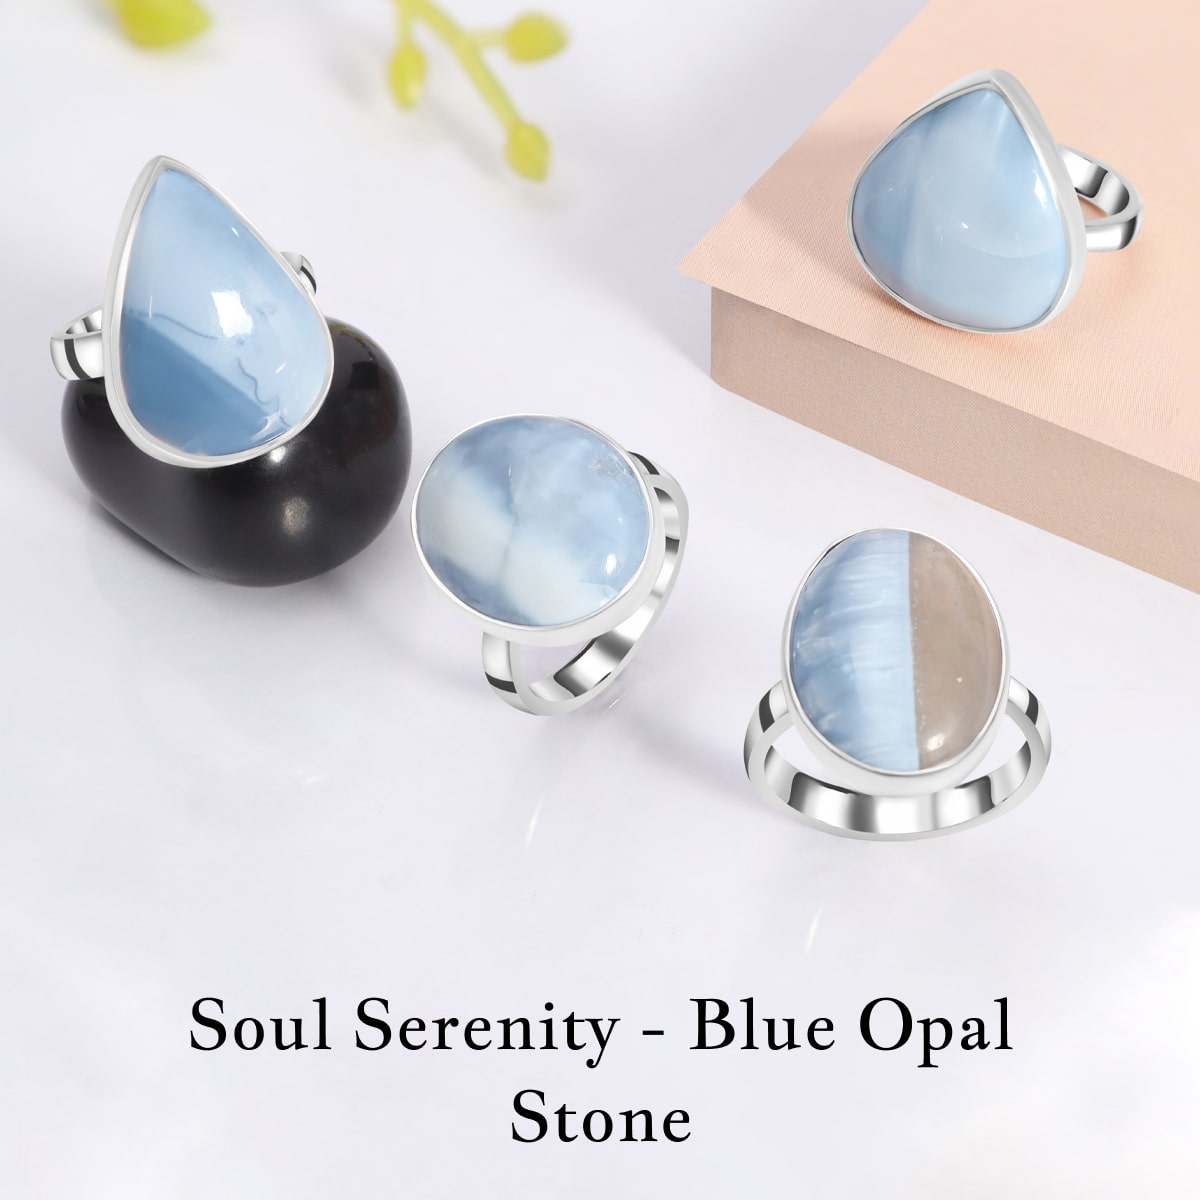 Spiritual Benefits of Blue Opal Stone